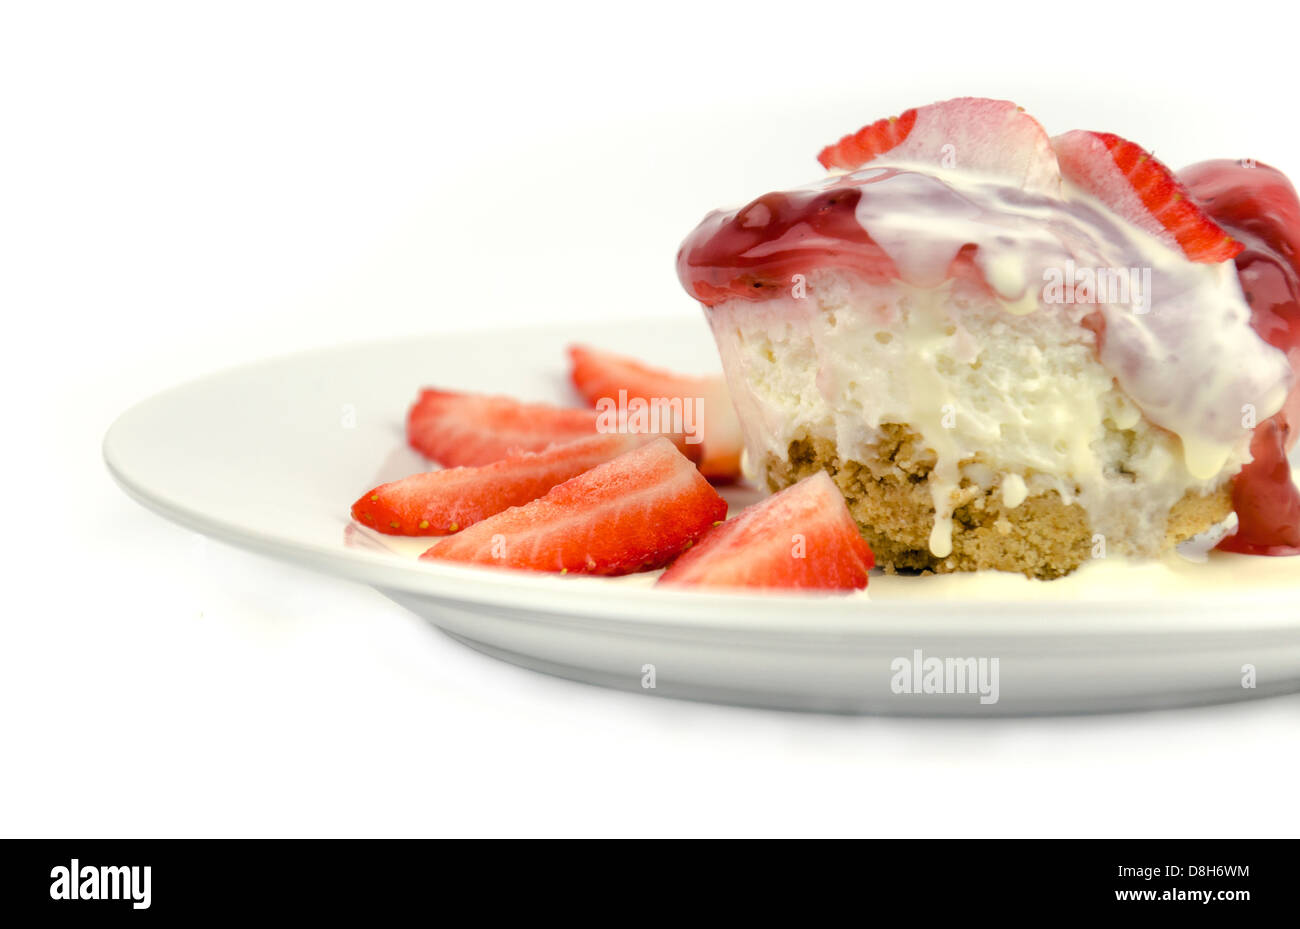 Strawberry Cheesecake con fresas frescas y nata fresca Foto de stock